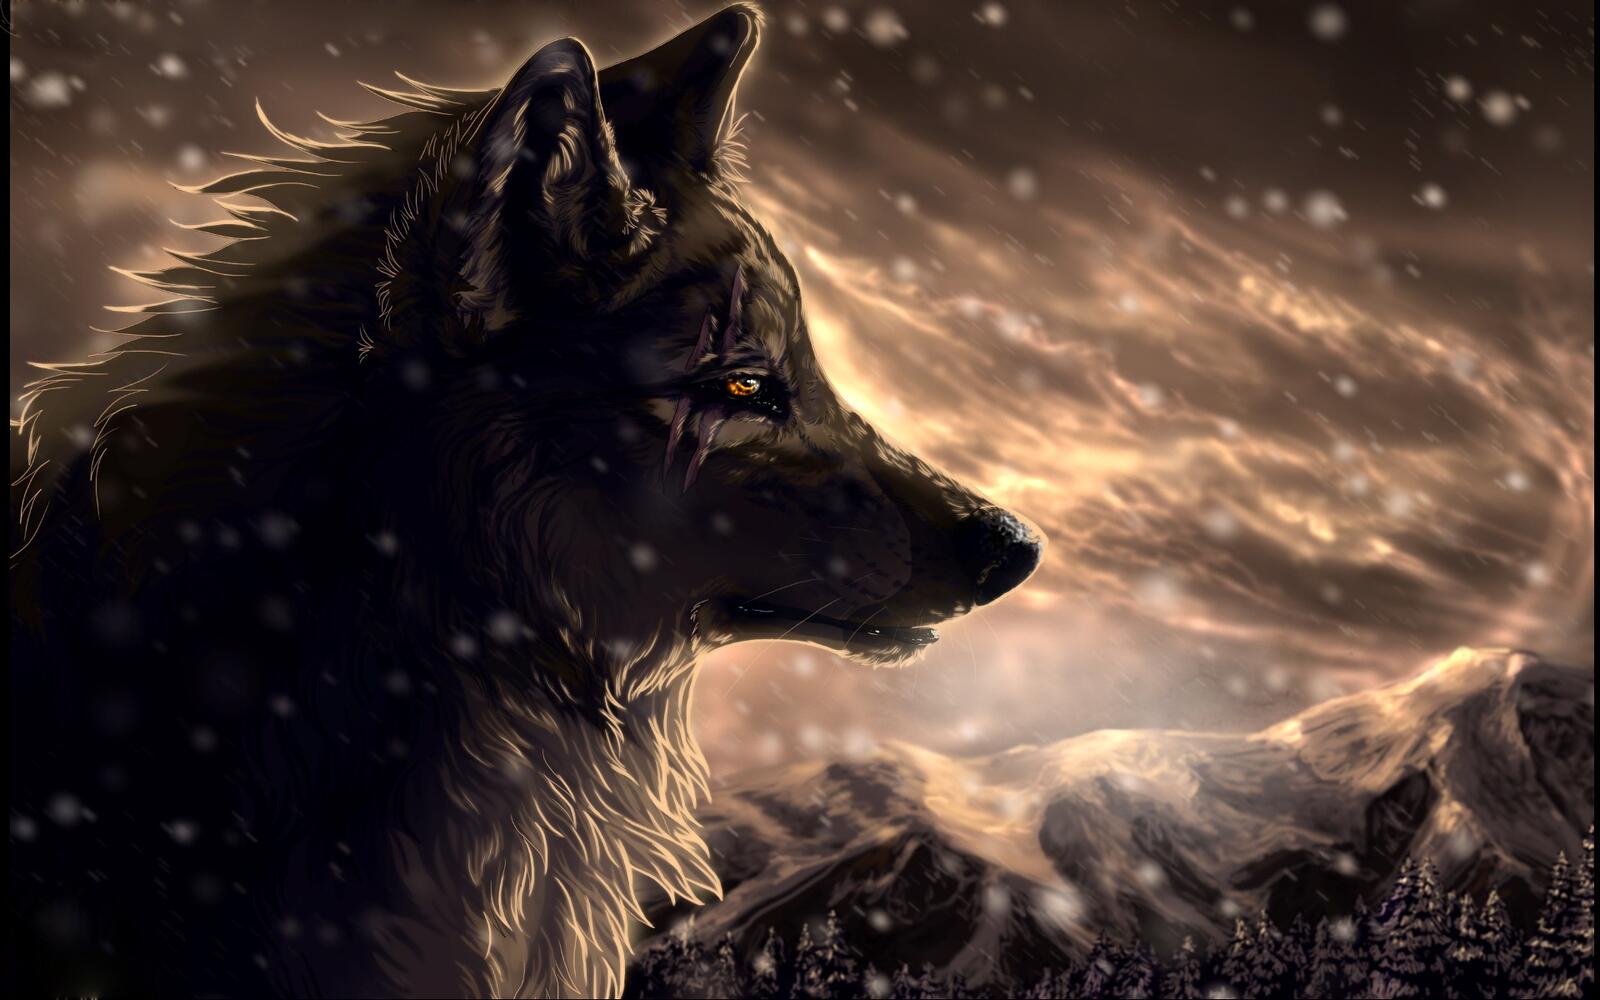 Бесплатное фото Рендеринг волк